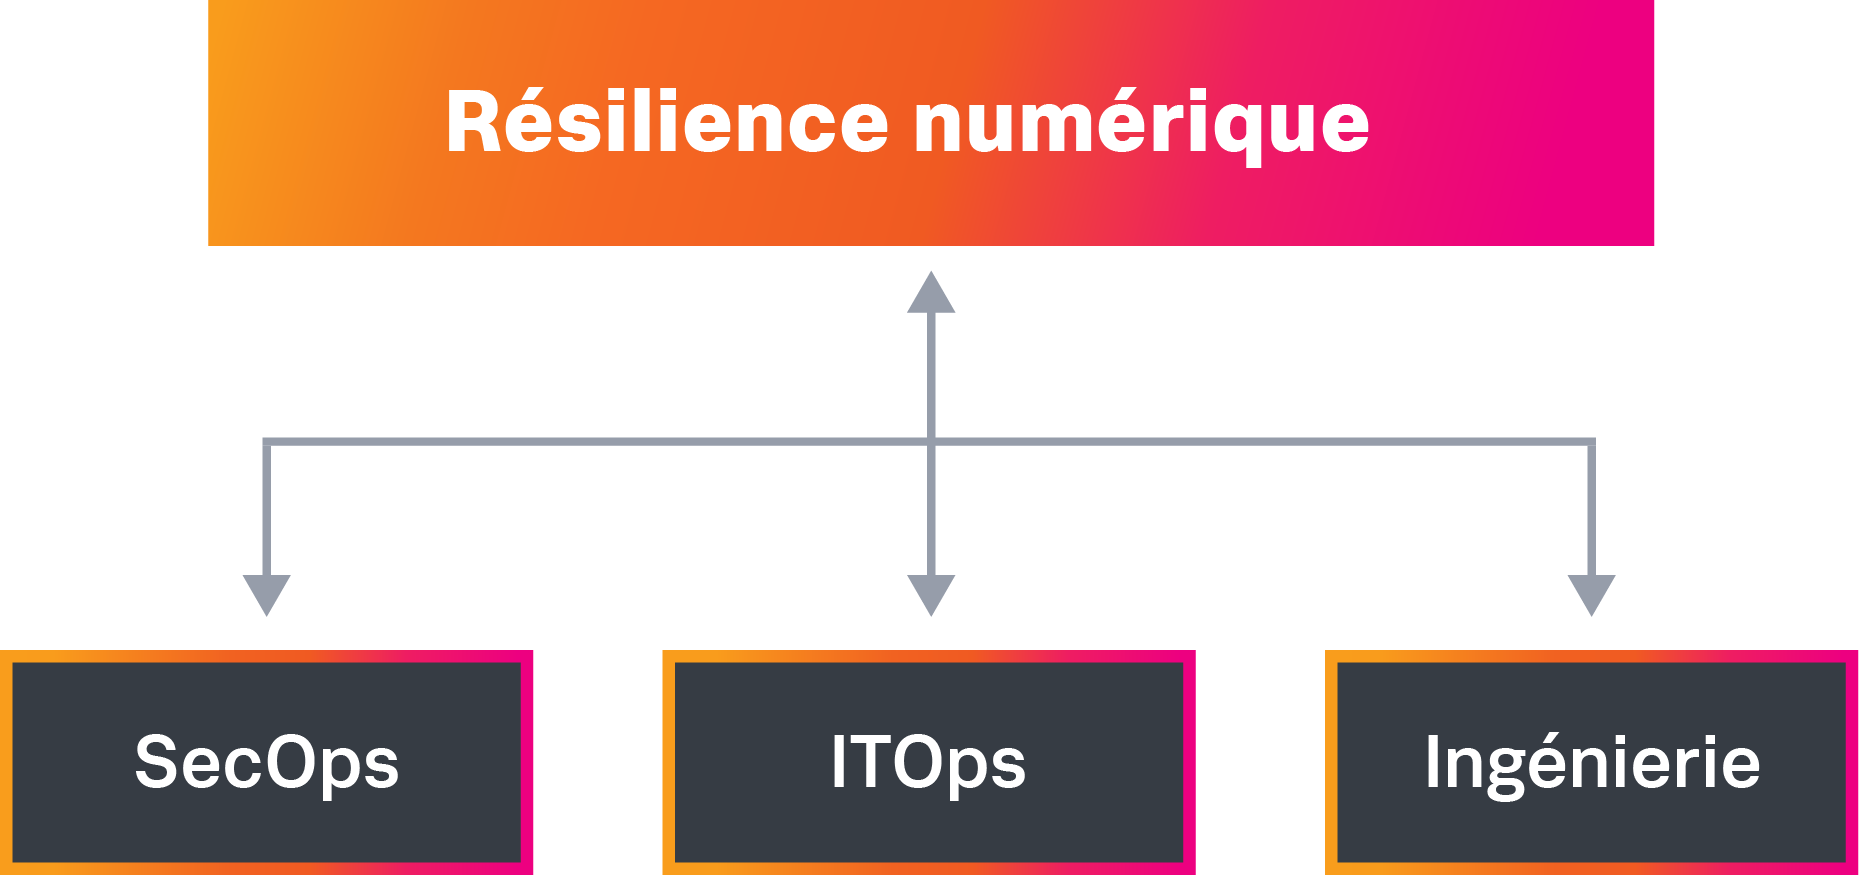 resilience-team-diagram